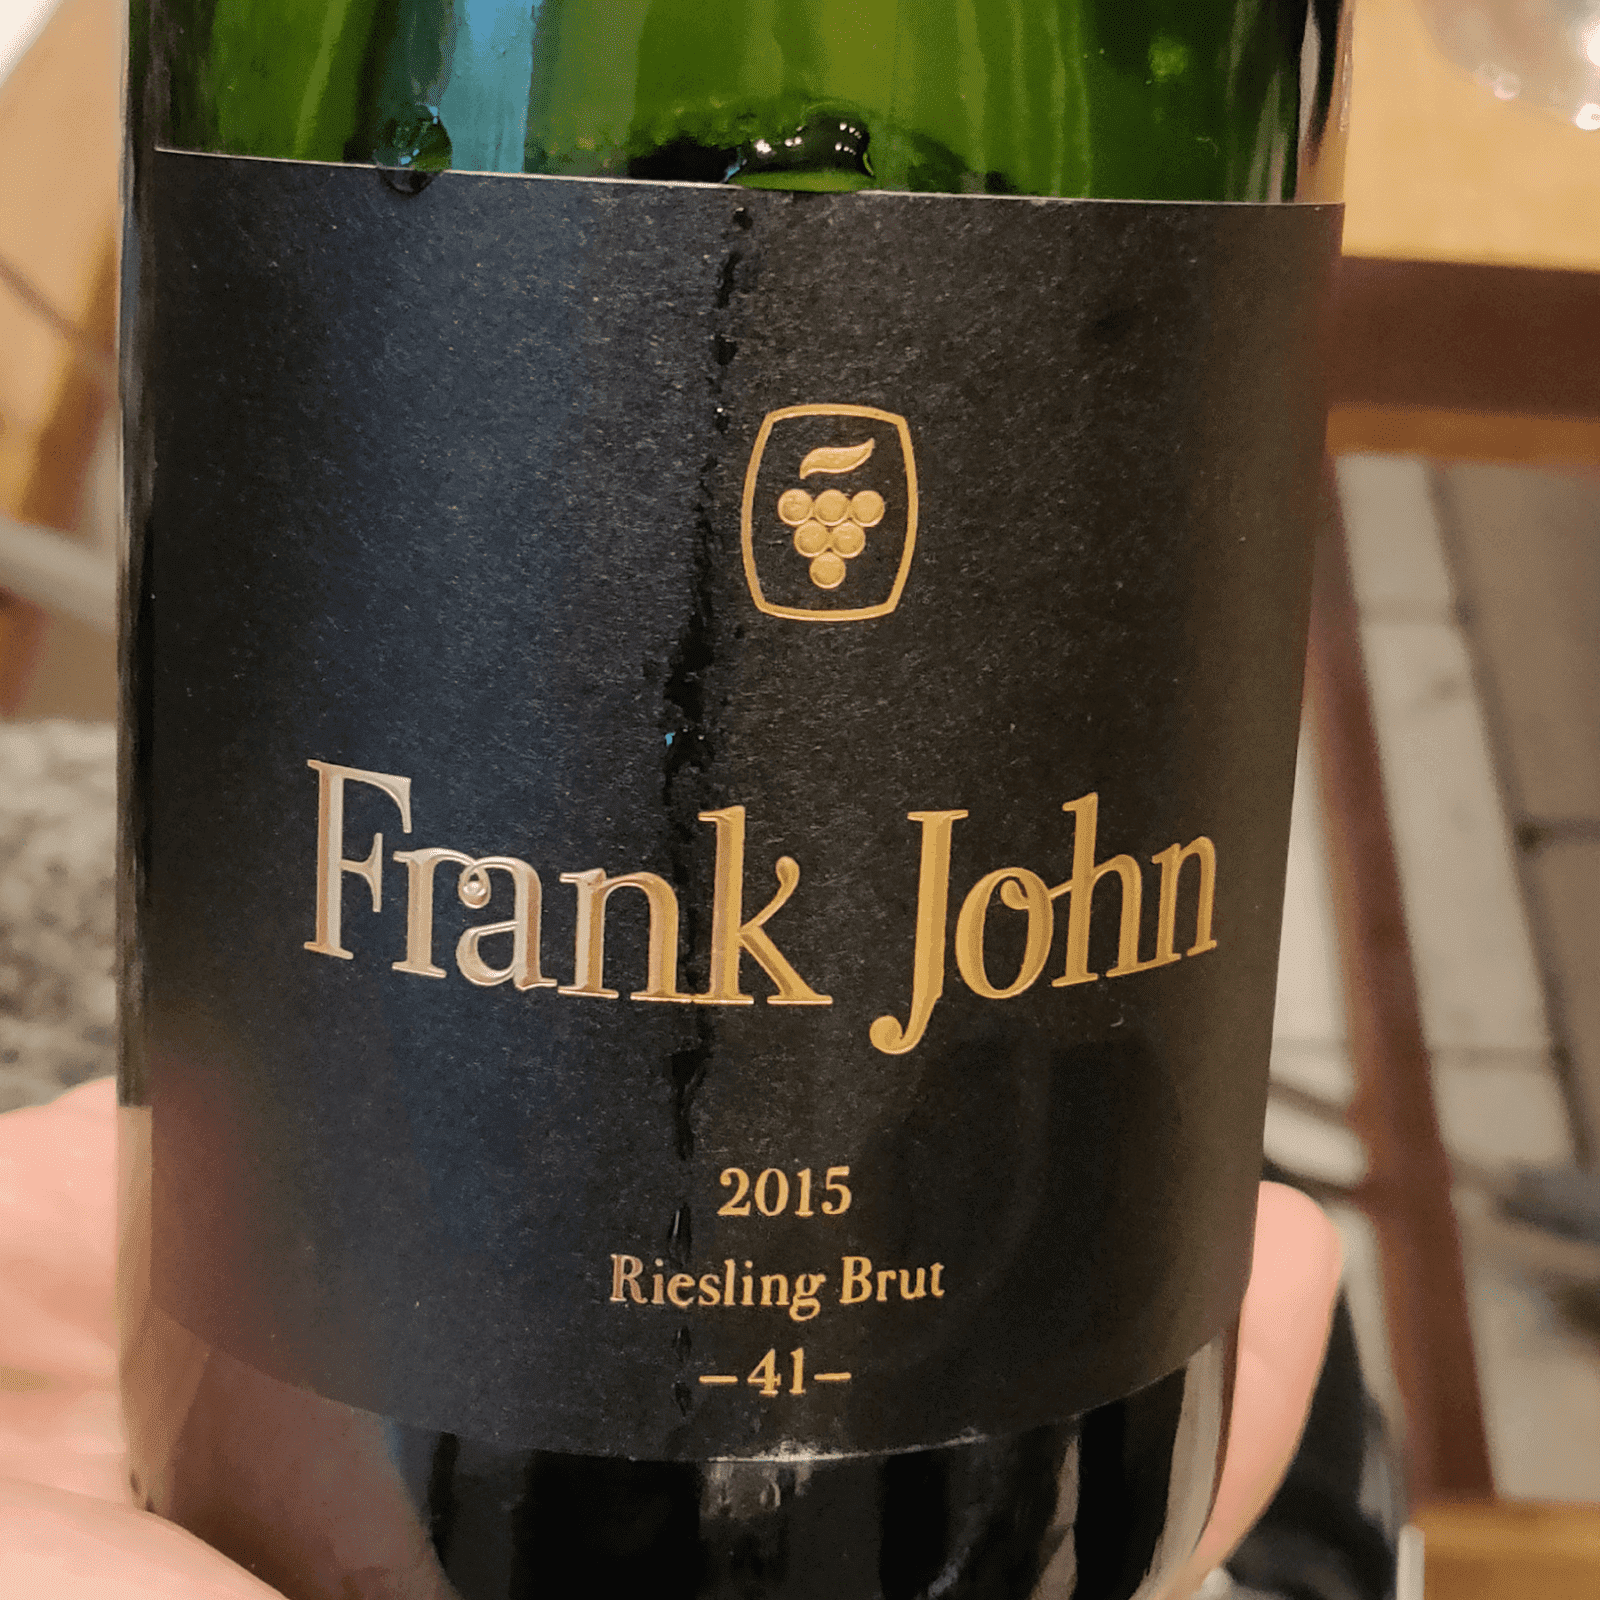 Frank-John-Riesling-Brut-2015_1-1